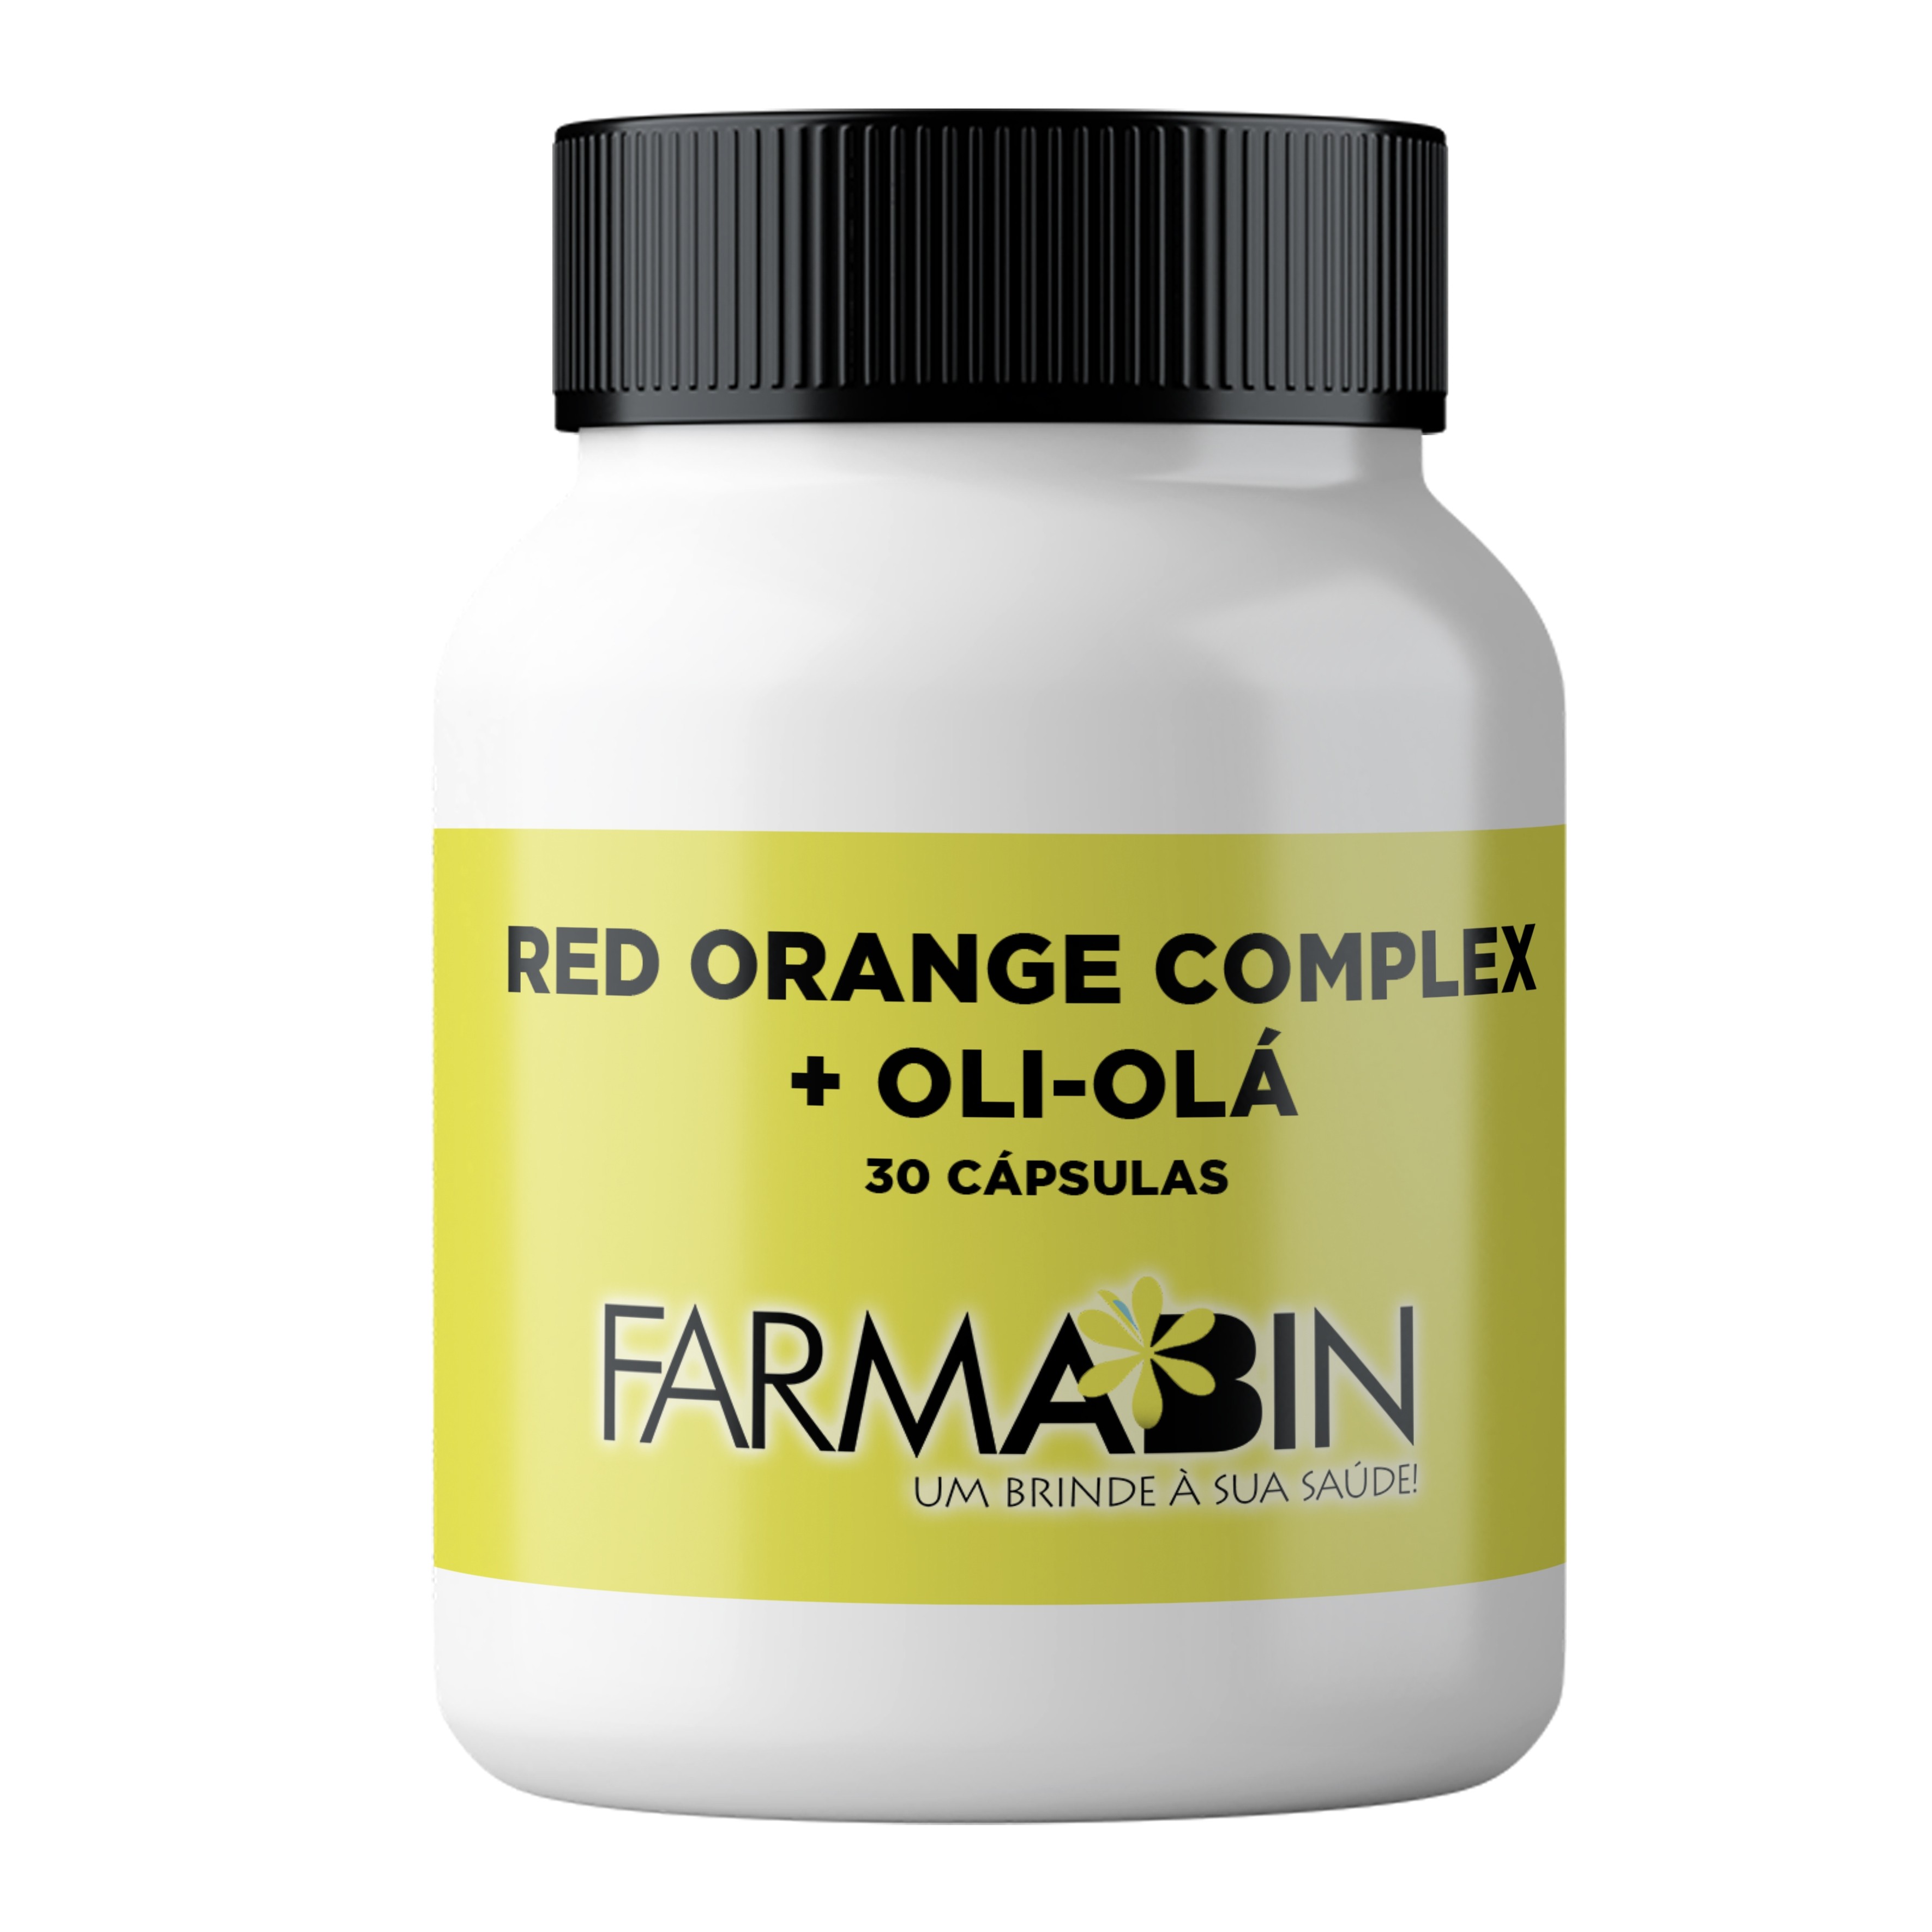 Red Orange Complex® + Oli-Ola